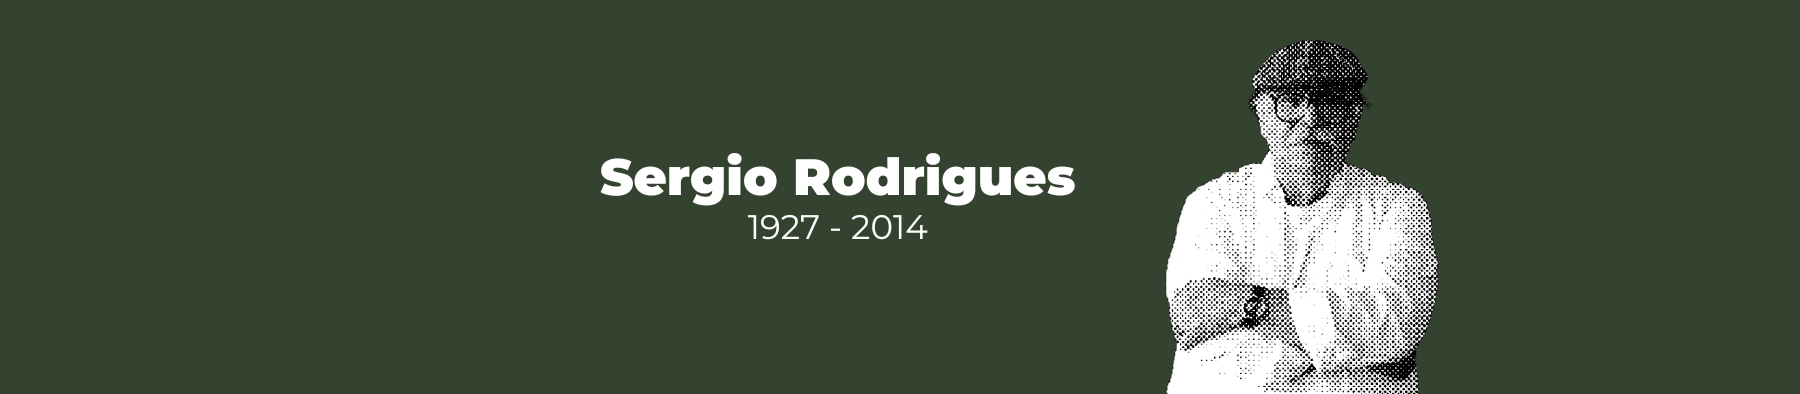 Sergio Rodrigues obras vintage